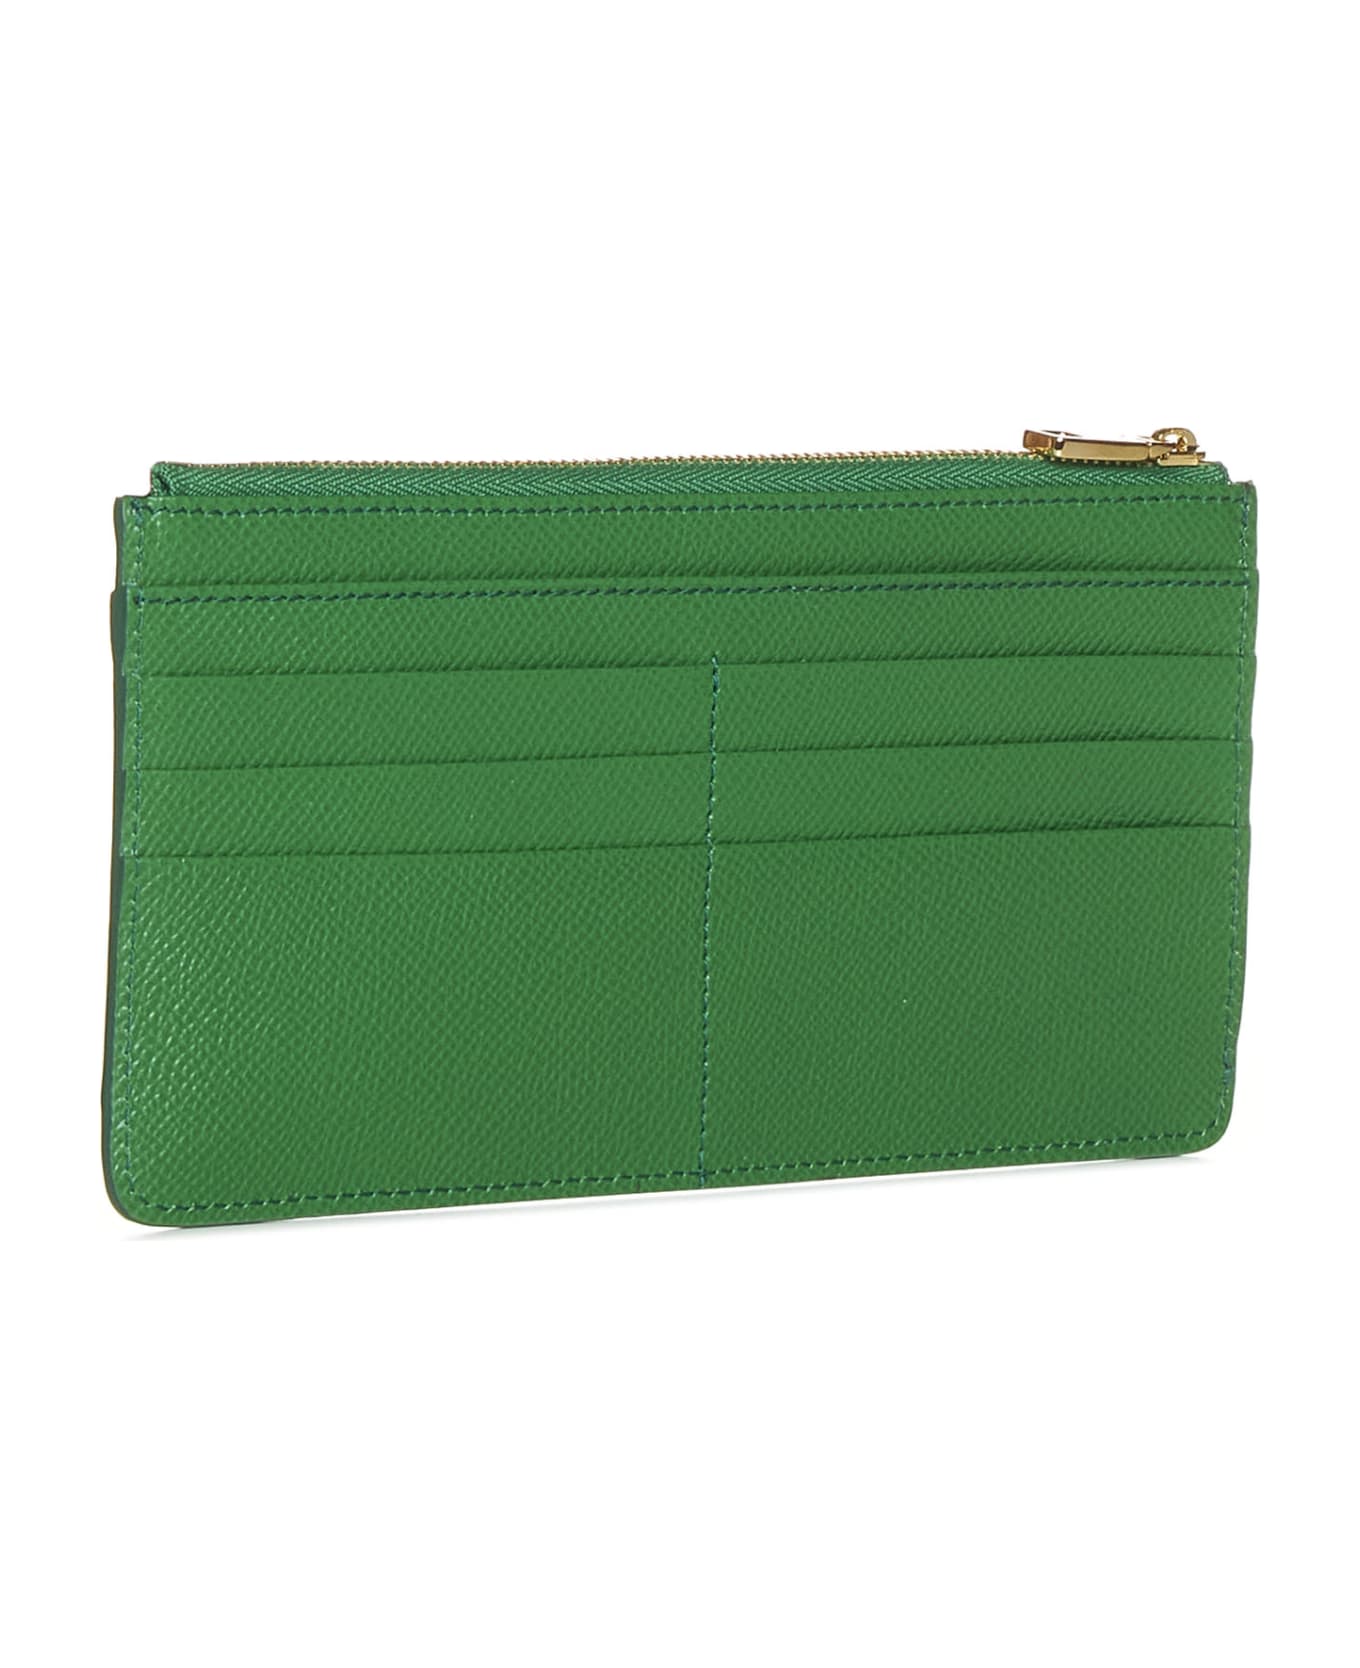 Dolce & Gabbana Card Holder - Verde 財布